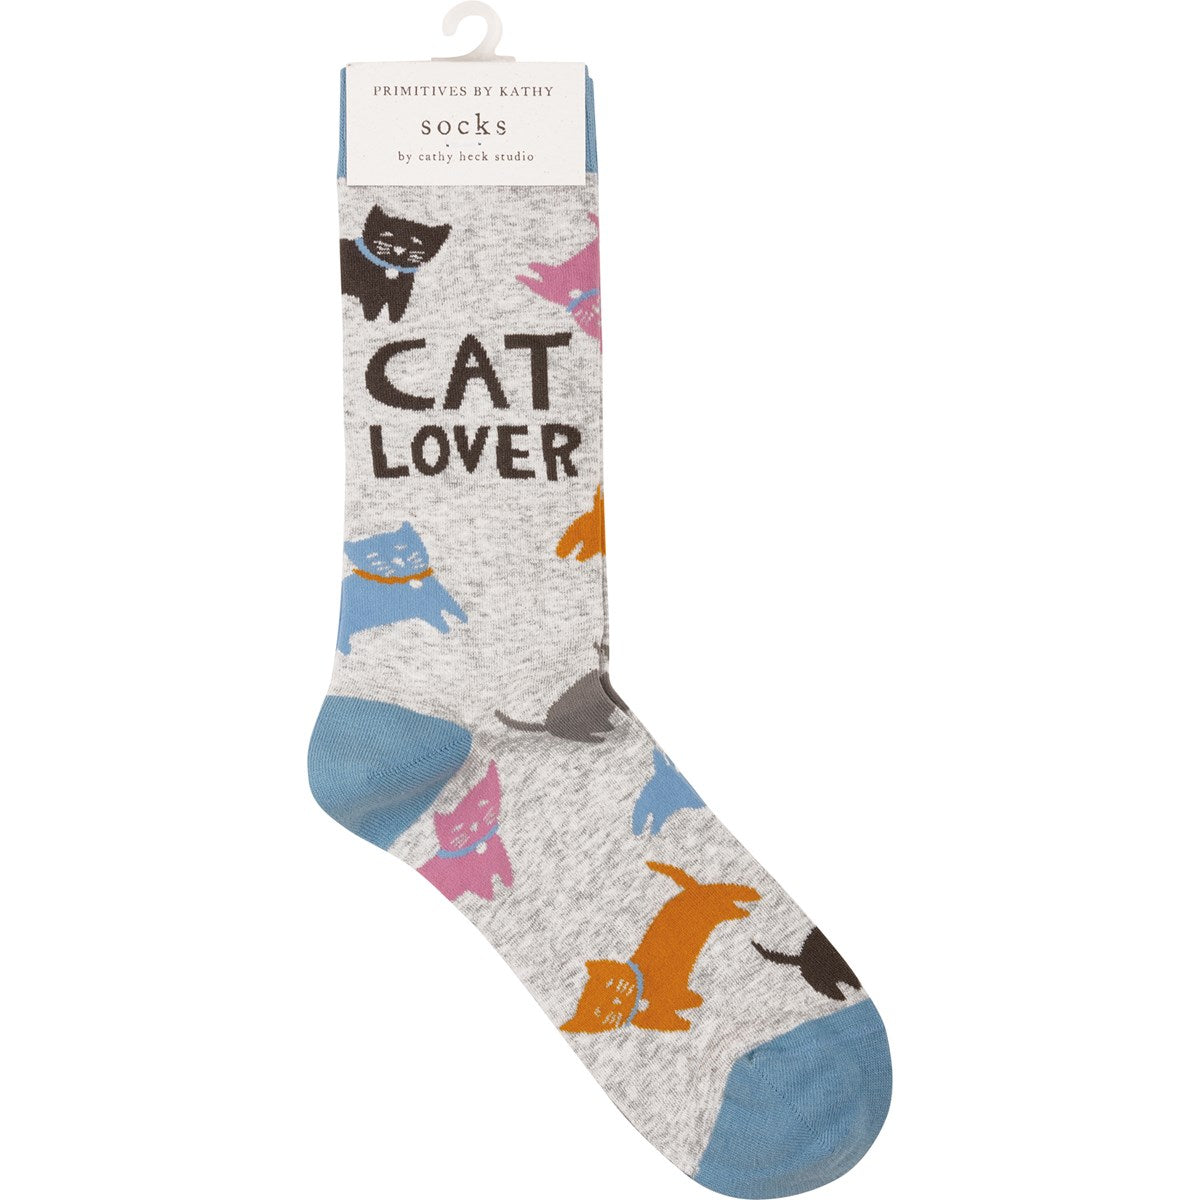 💙 Colorful Collar Cat Lover Unisex Fun Socks